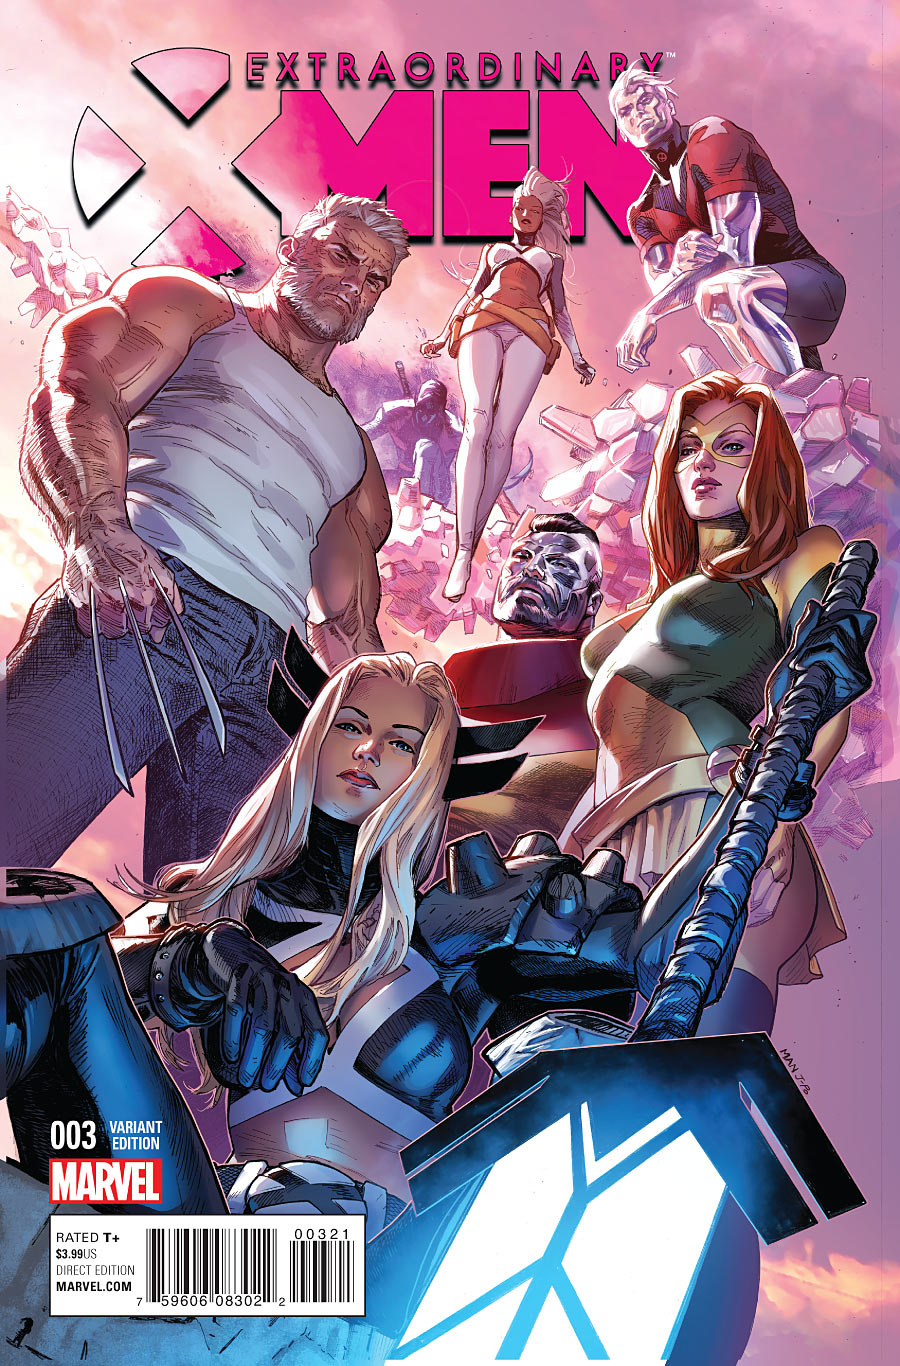 Extraordinary X-Men #14